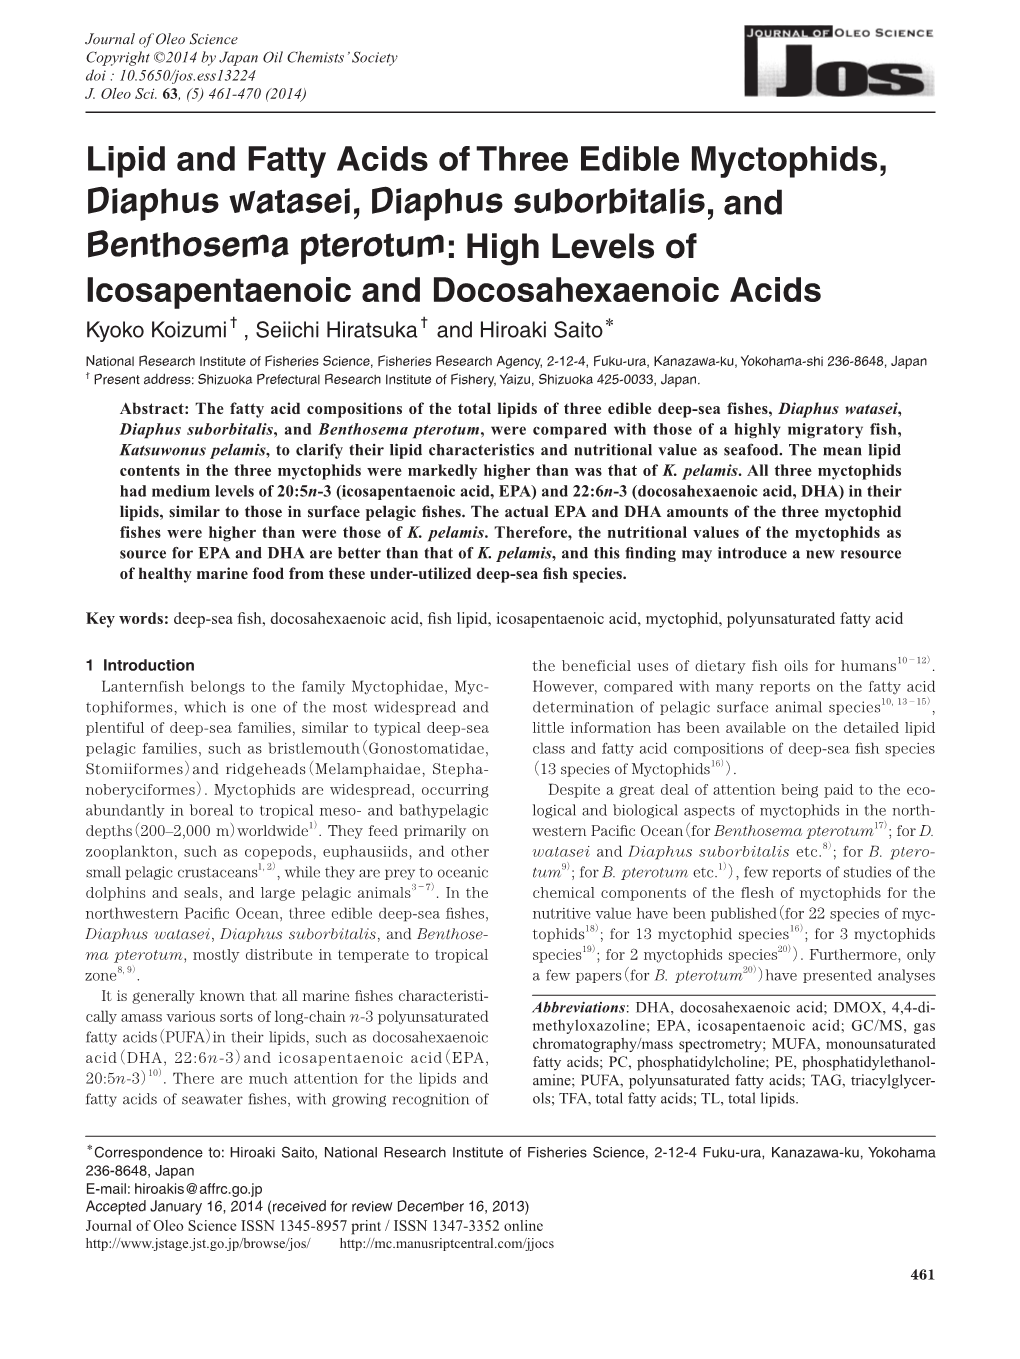 Lipid and Fatty Acids of Three Edible Myctophids, Diaphus Watasei